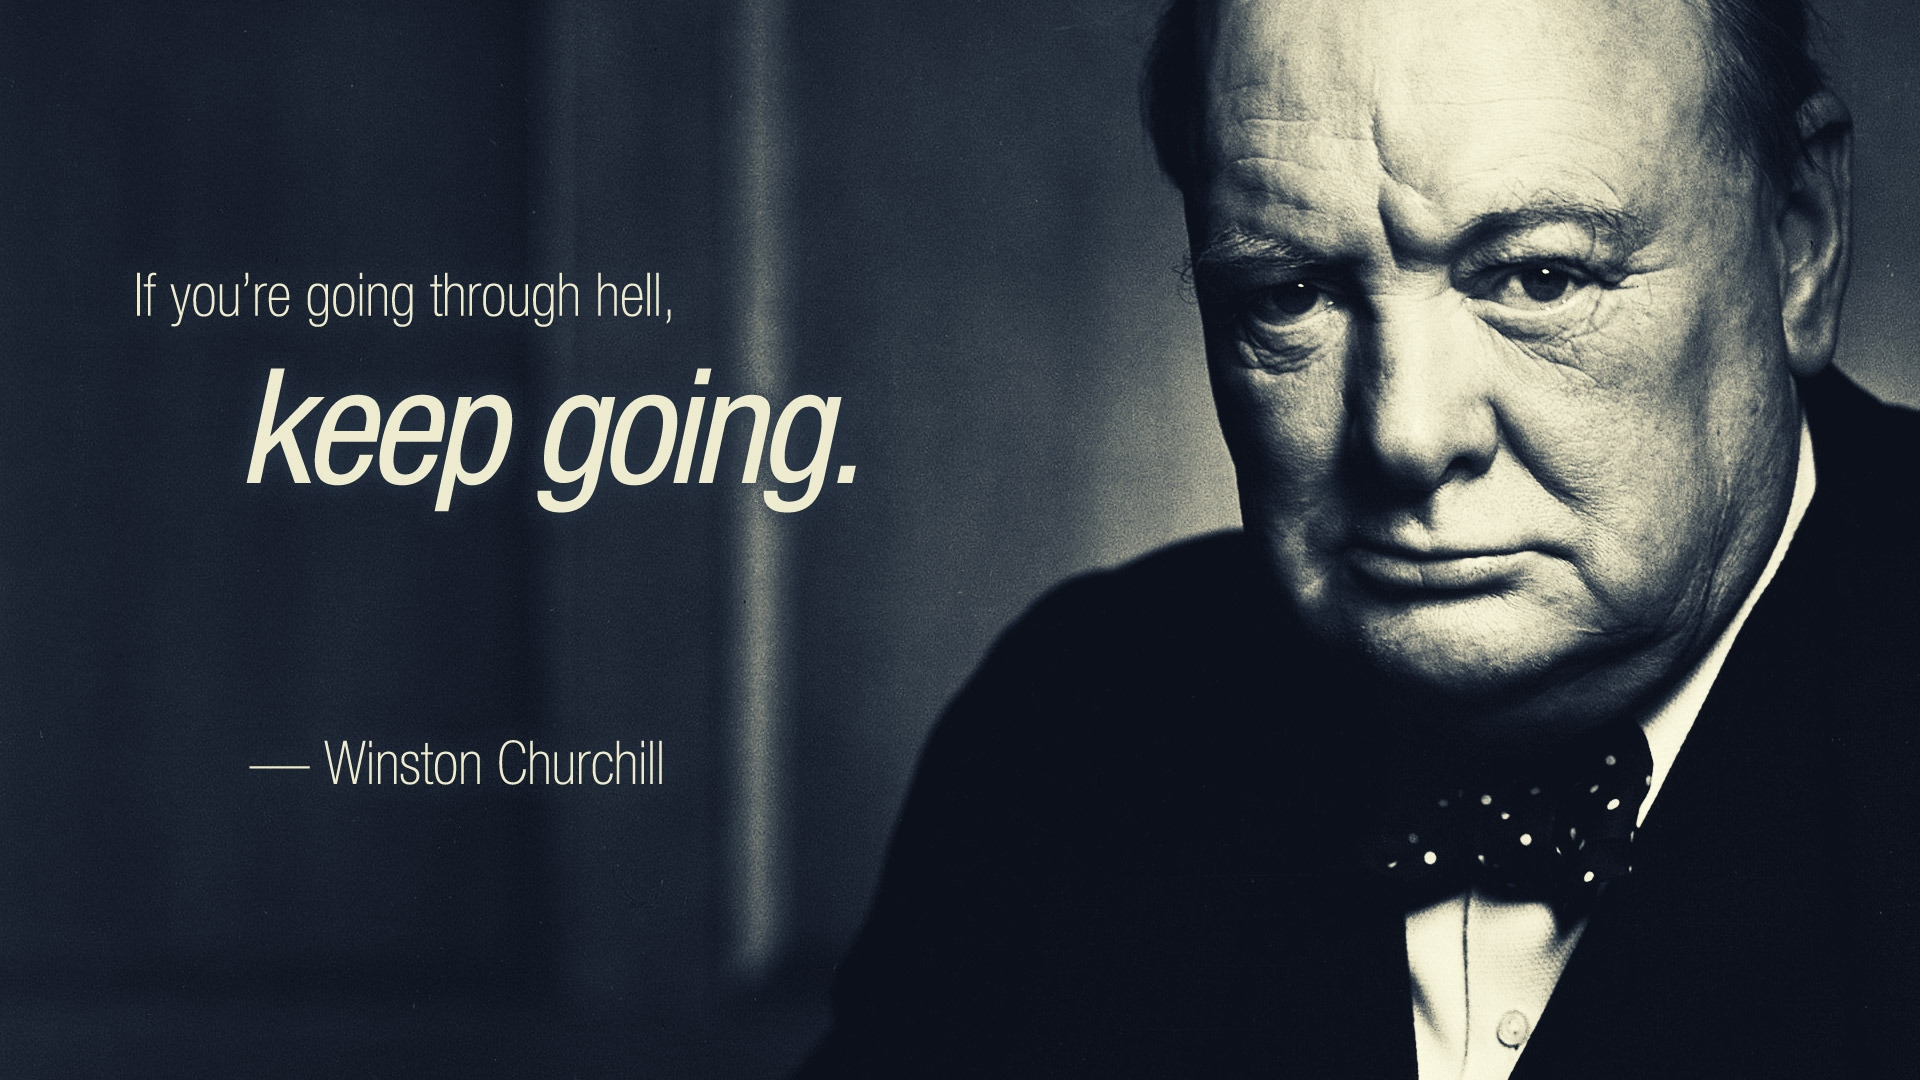 Winston Churchill Quote for 1920 x 1080 HDTV 1080p resolution